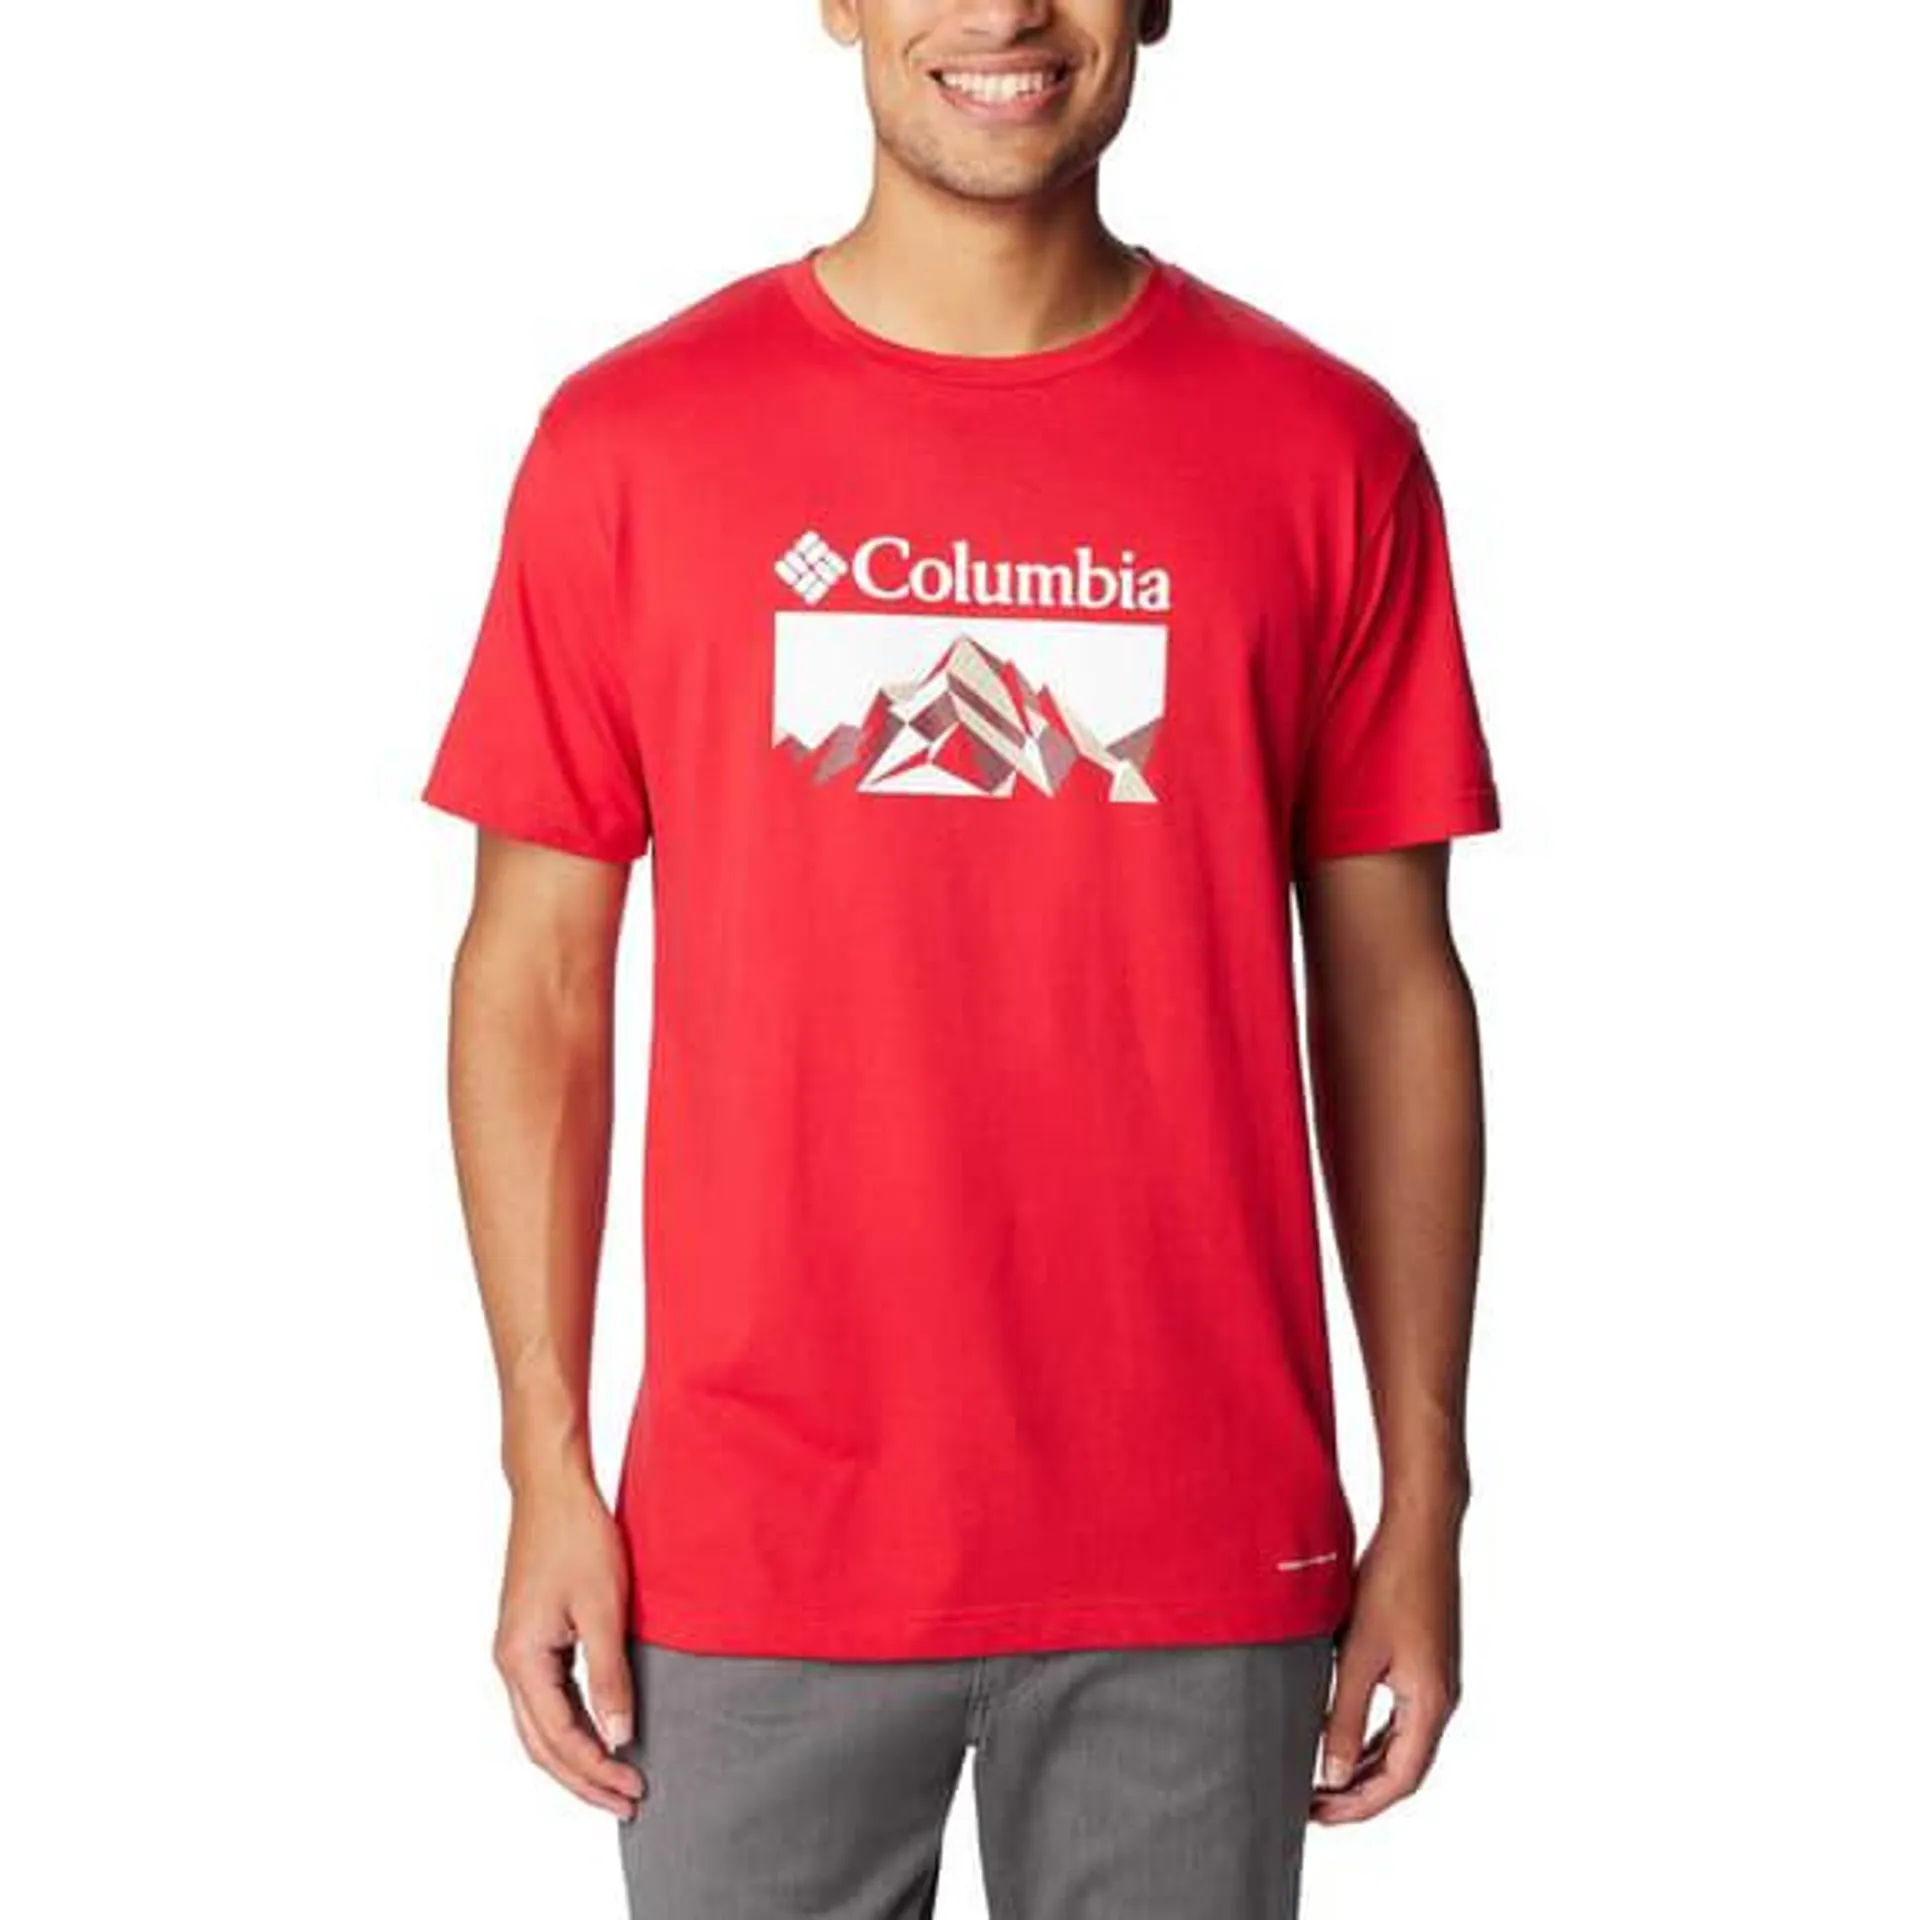 T-shirt Columbia Thistletown Hills Graphic manche courte rouge logo blanc